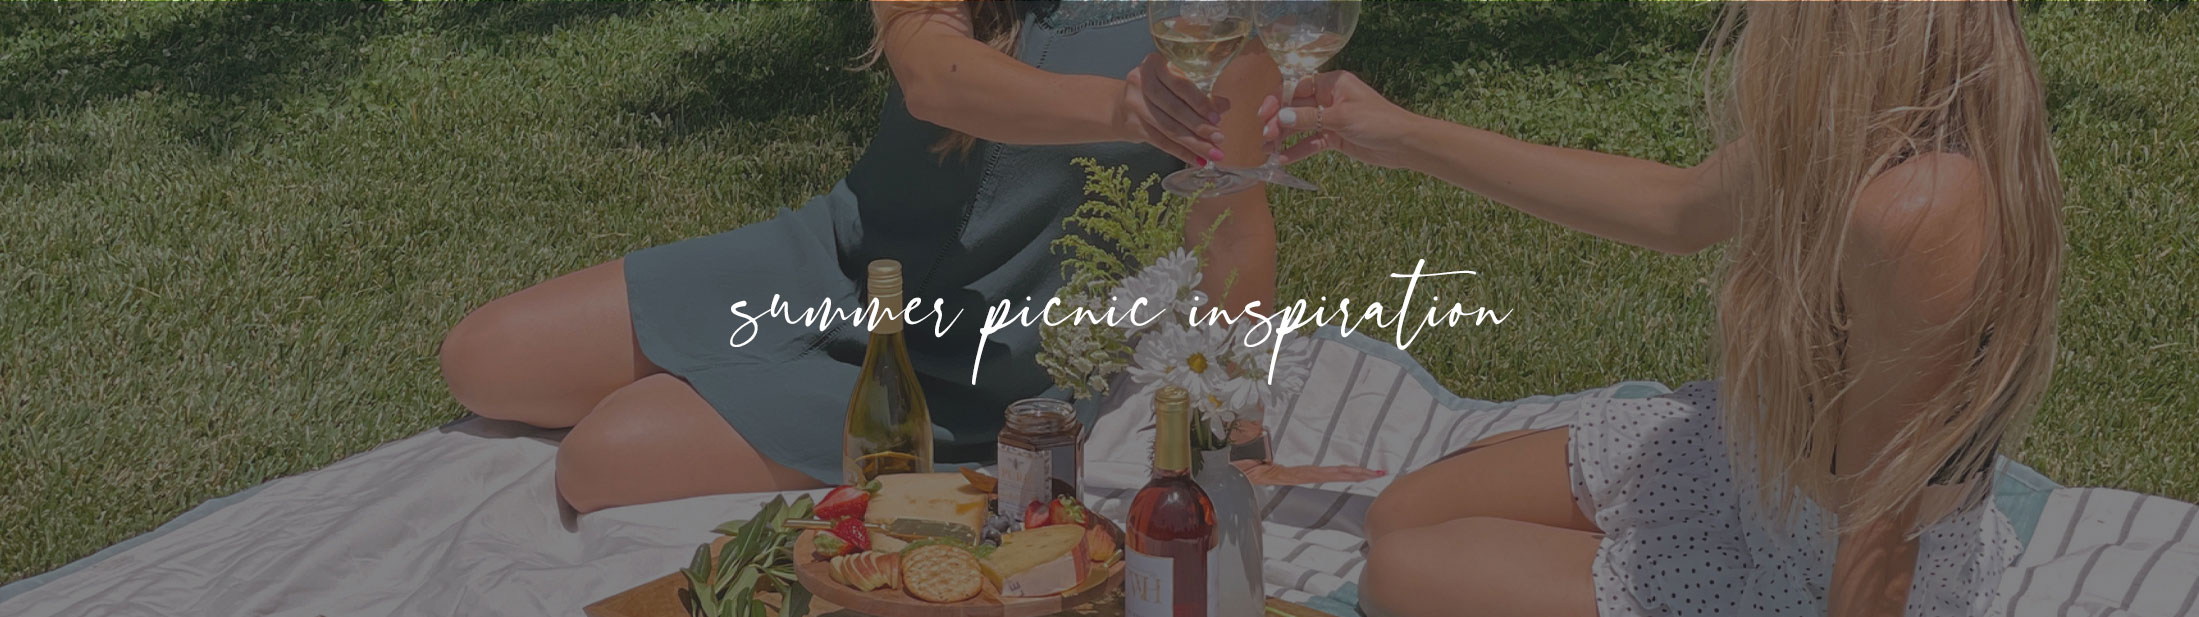 Summer picnic inspiration